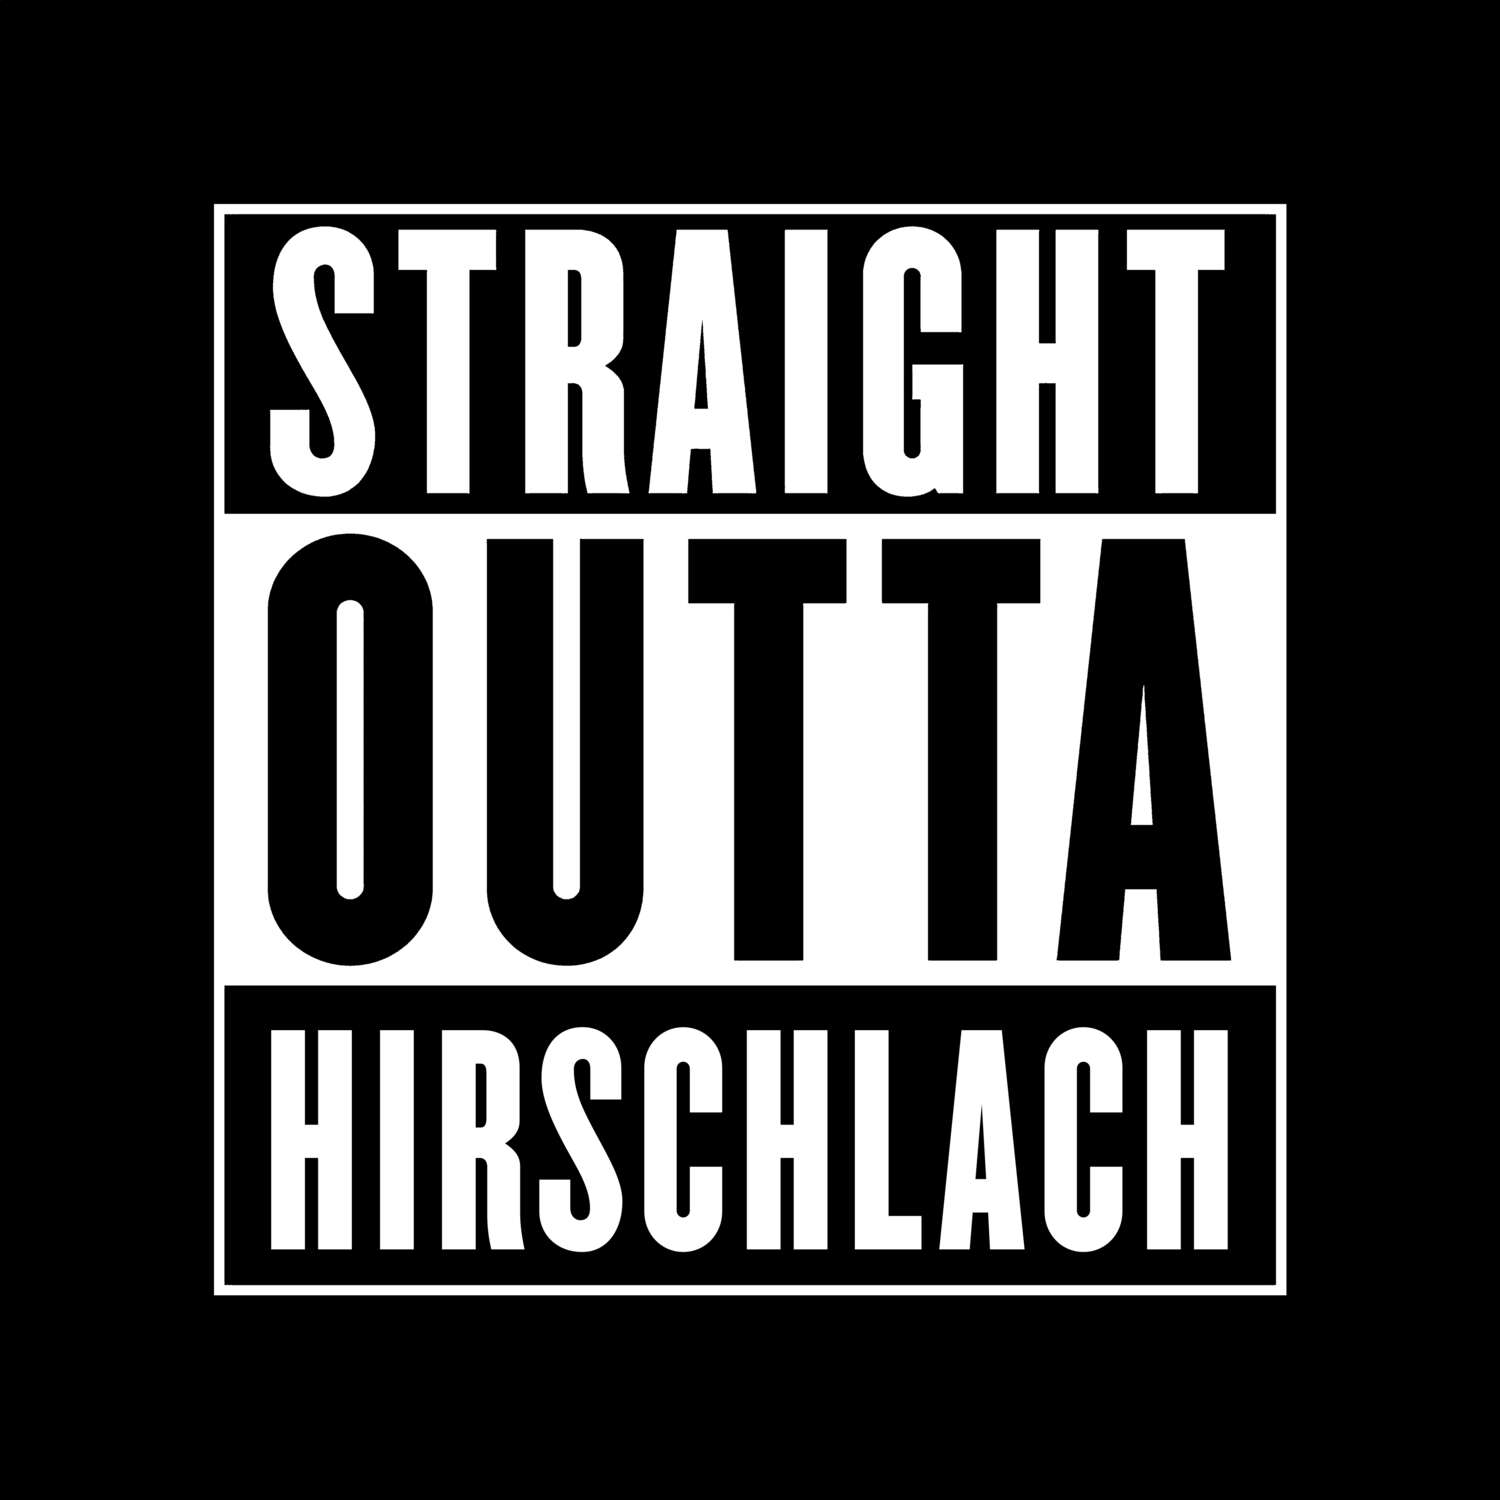 Hirschlach T-Shirt »Straight Outta«